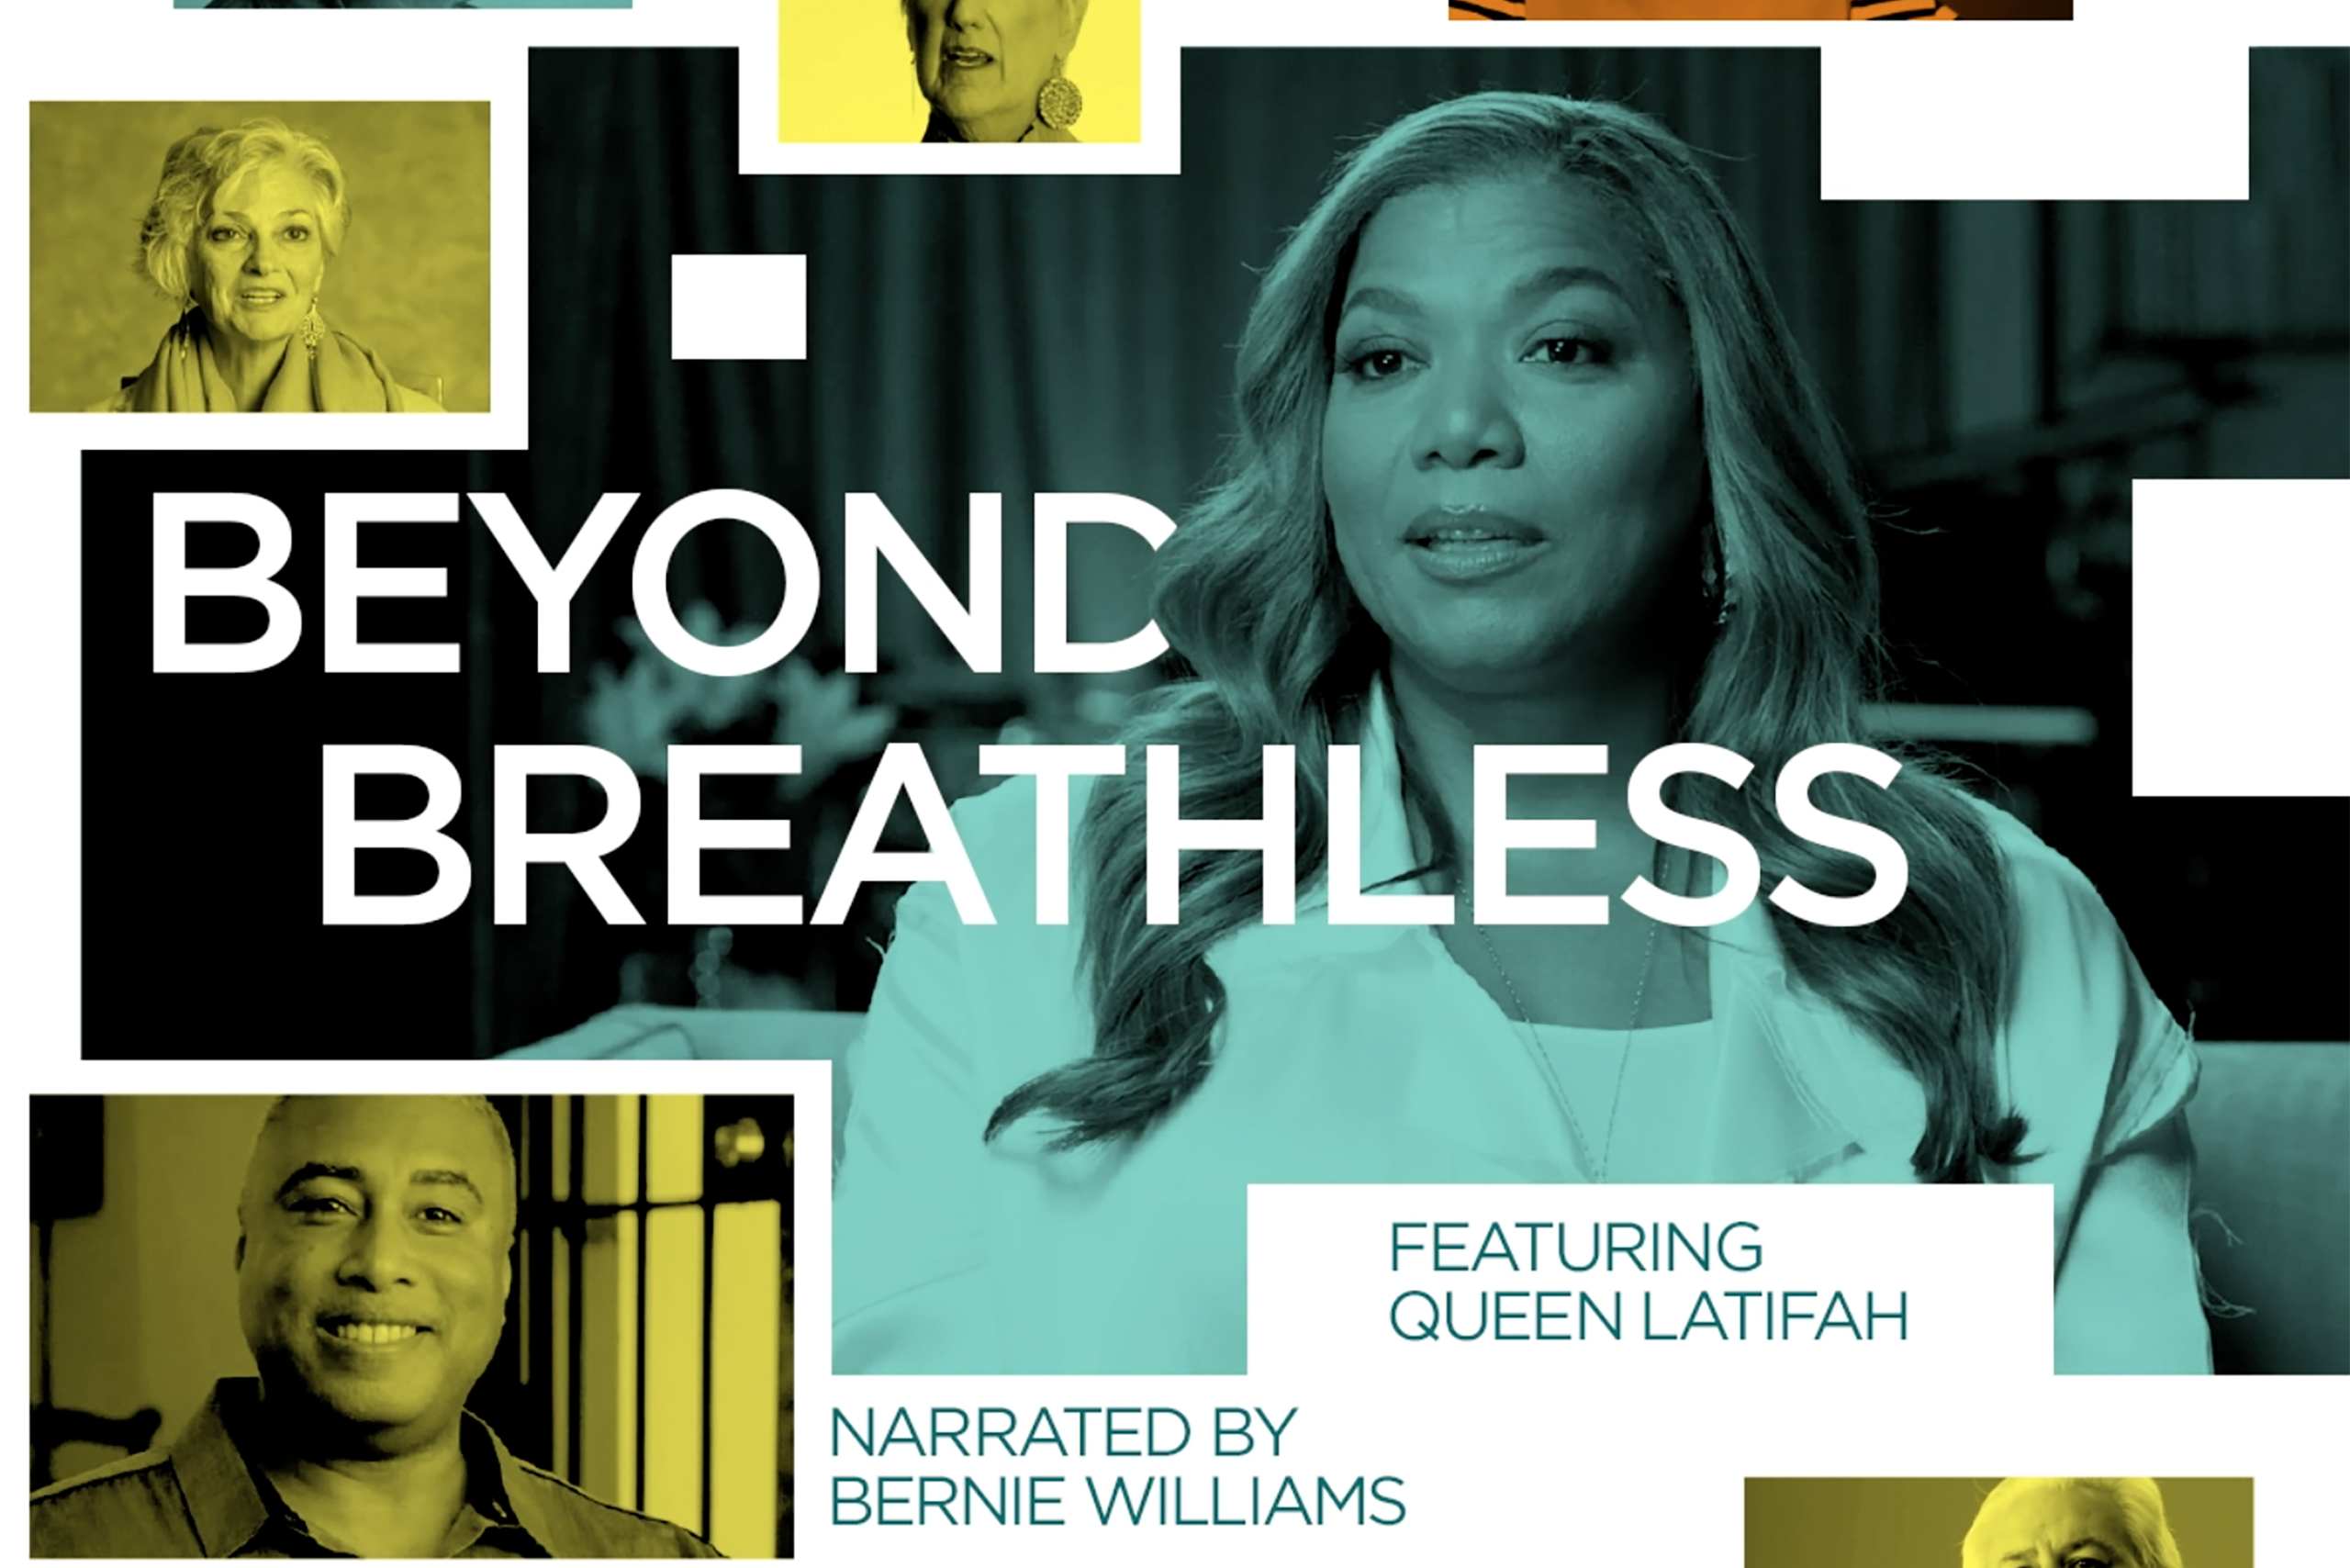 "Beyond Breathless" documentary